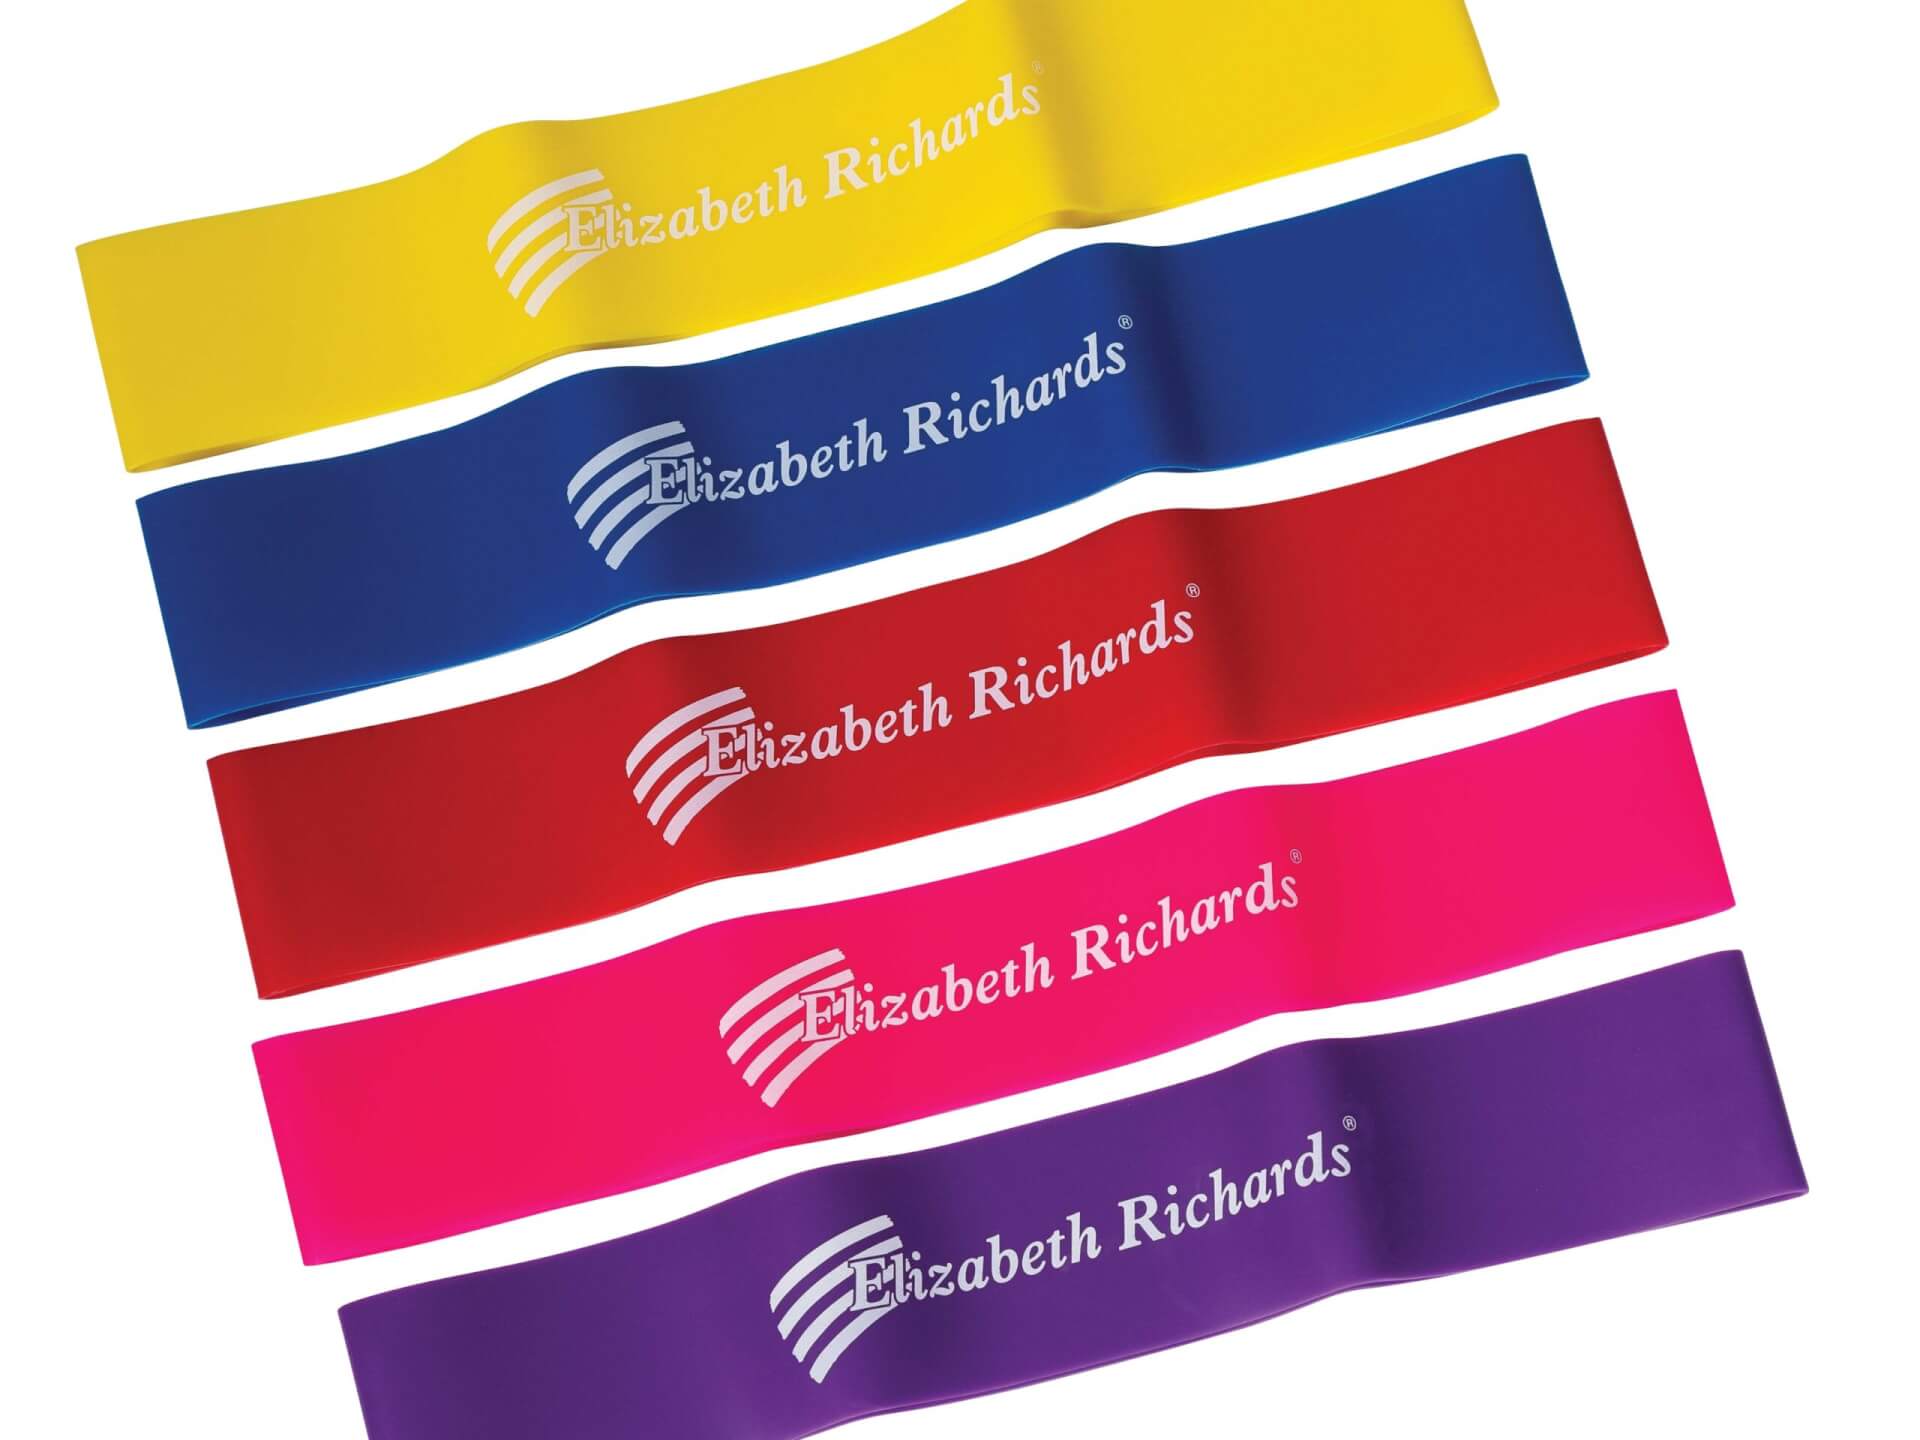 Elizabeth Richards chair bands